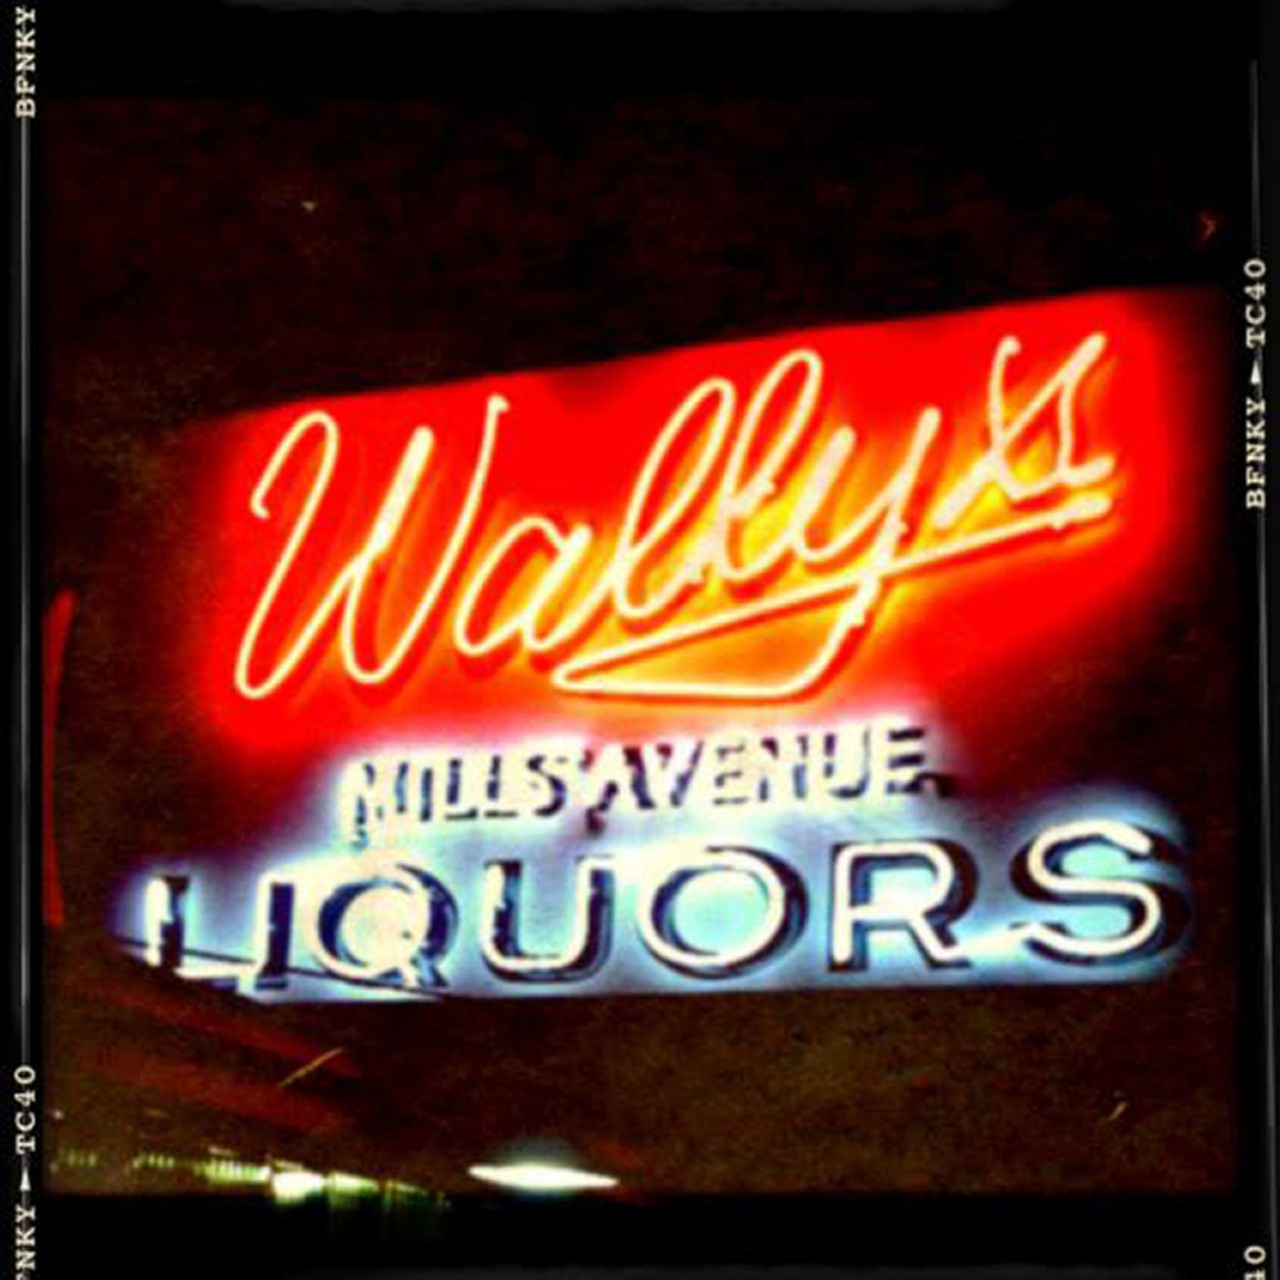 Saturday, Jan. 20Teacher Teacher, Problem Pack and the Palmettes at Wally's Mills Avenue Liquors